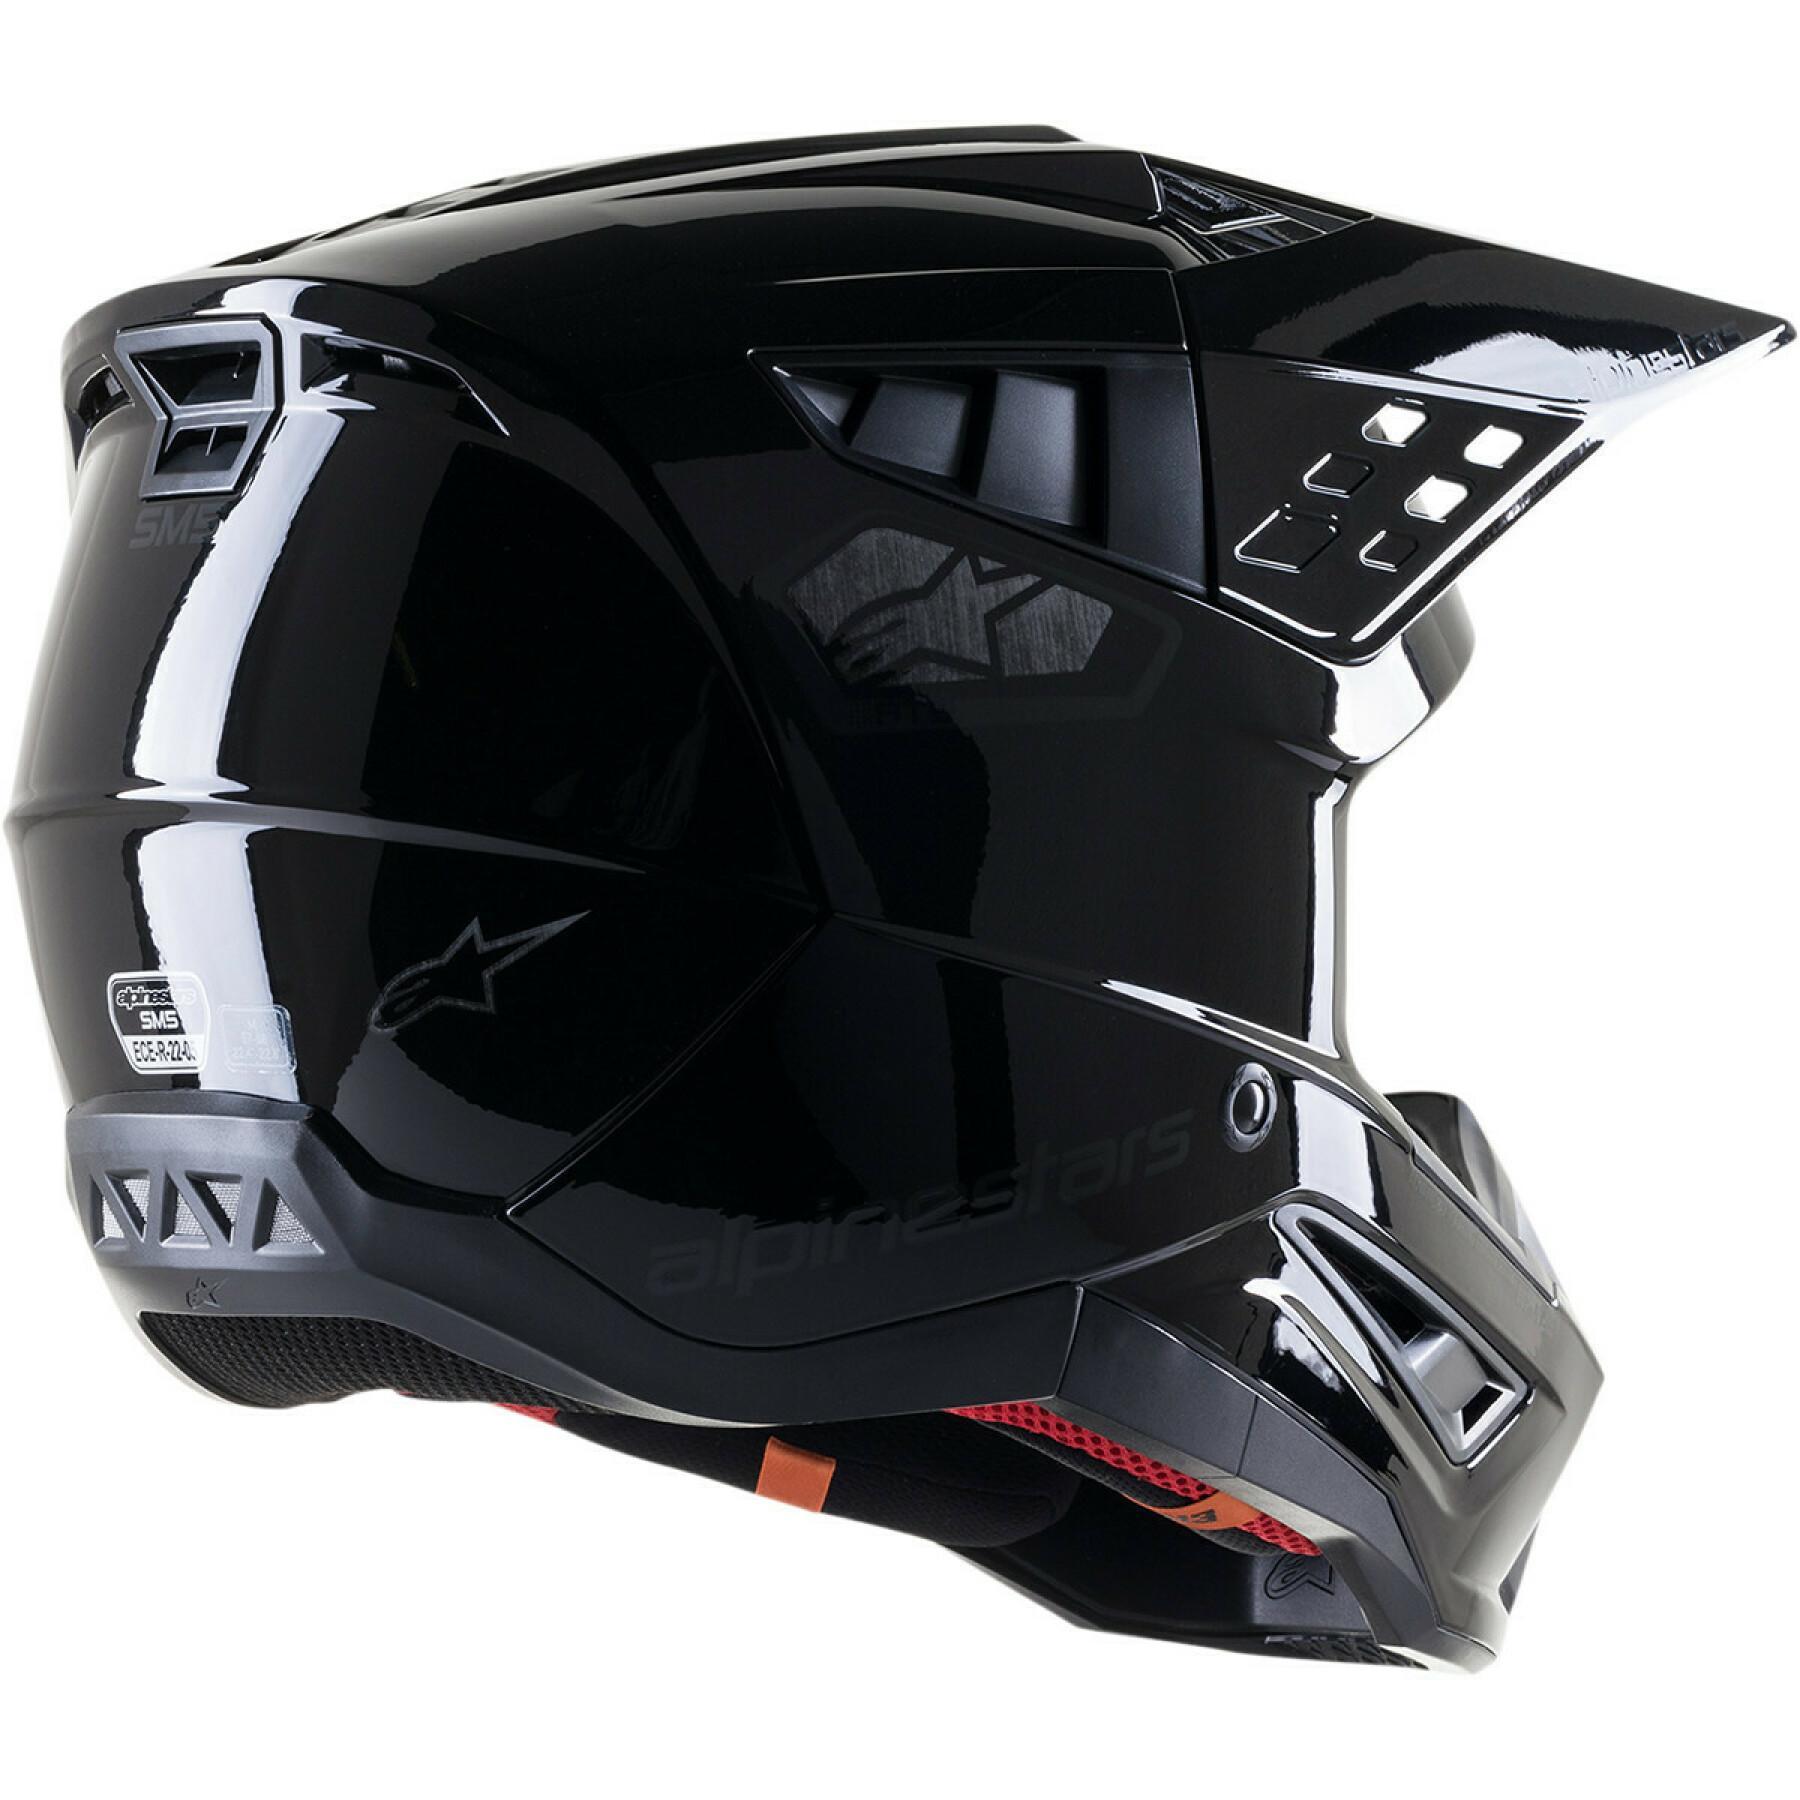 Motorcycle helmet Alpinestars SM5 scout